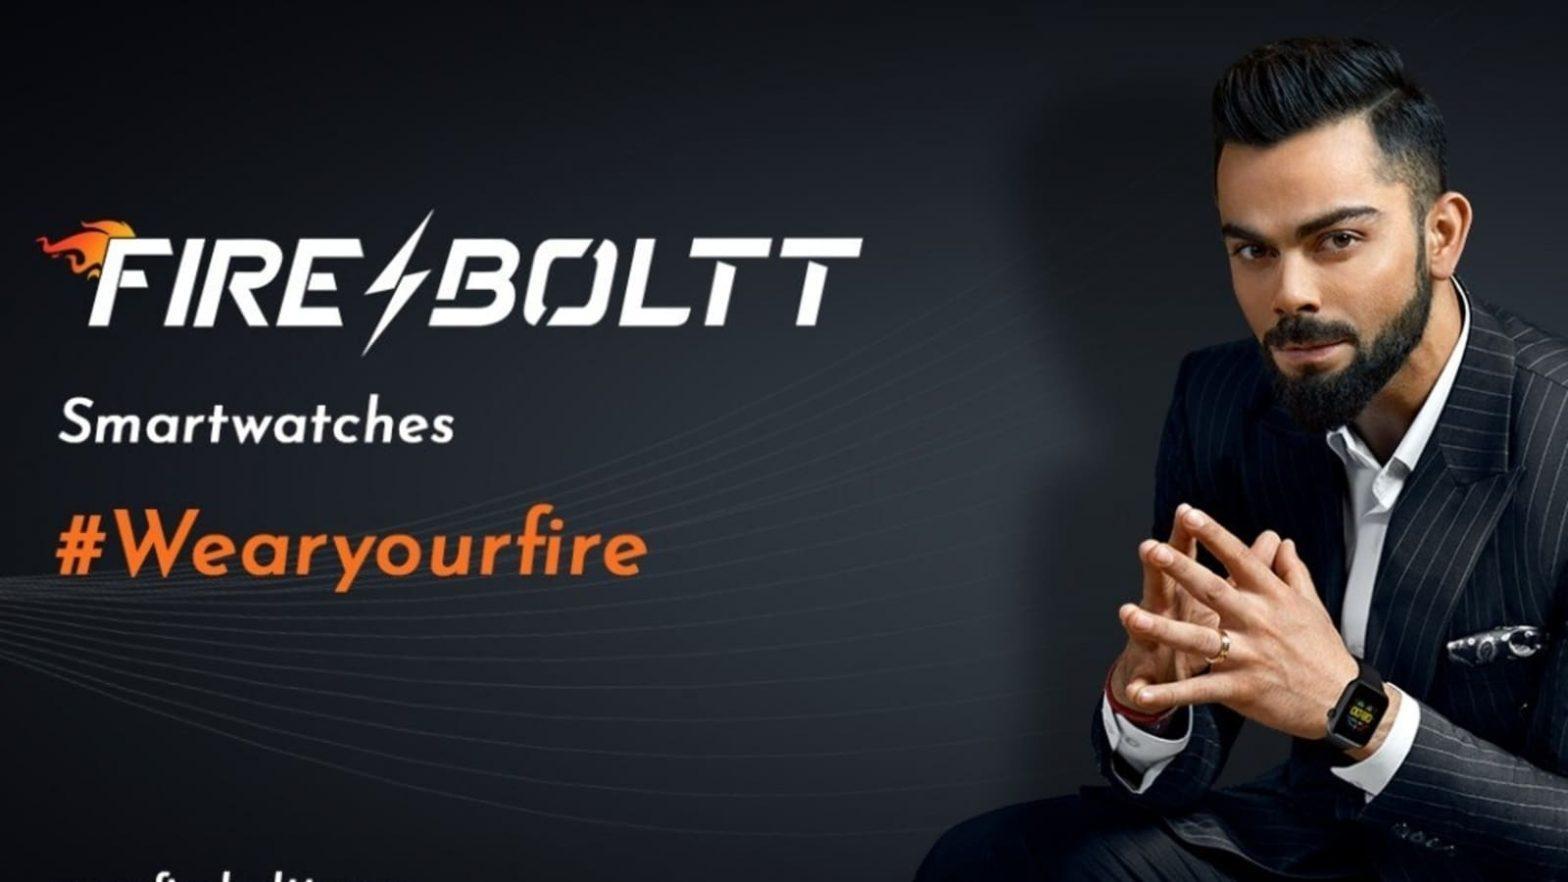 Fire-Boltt ropes in Virat Kohli as new brand ambassador